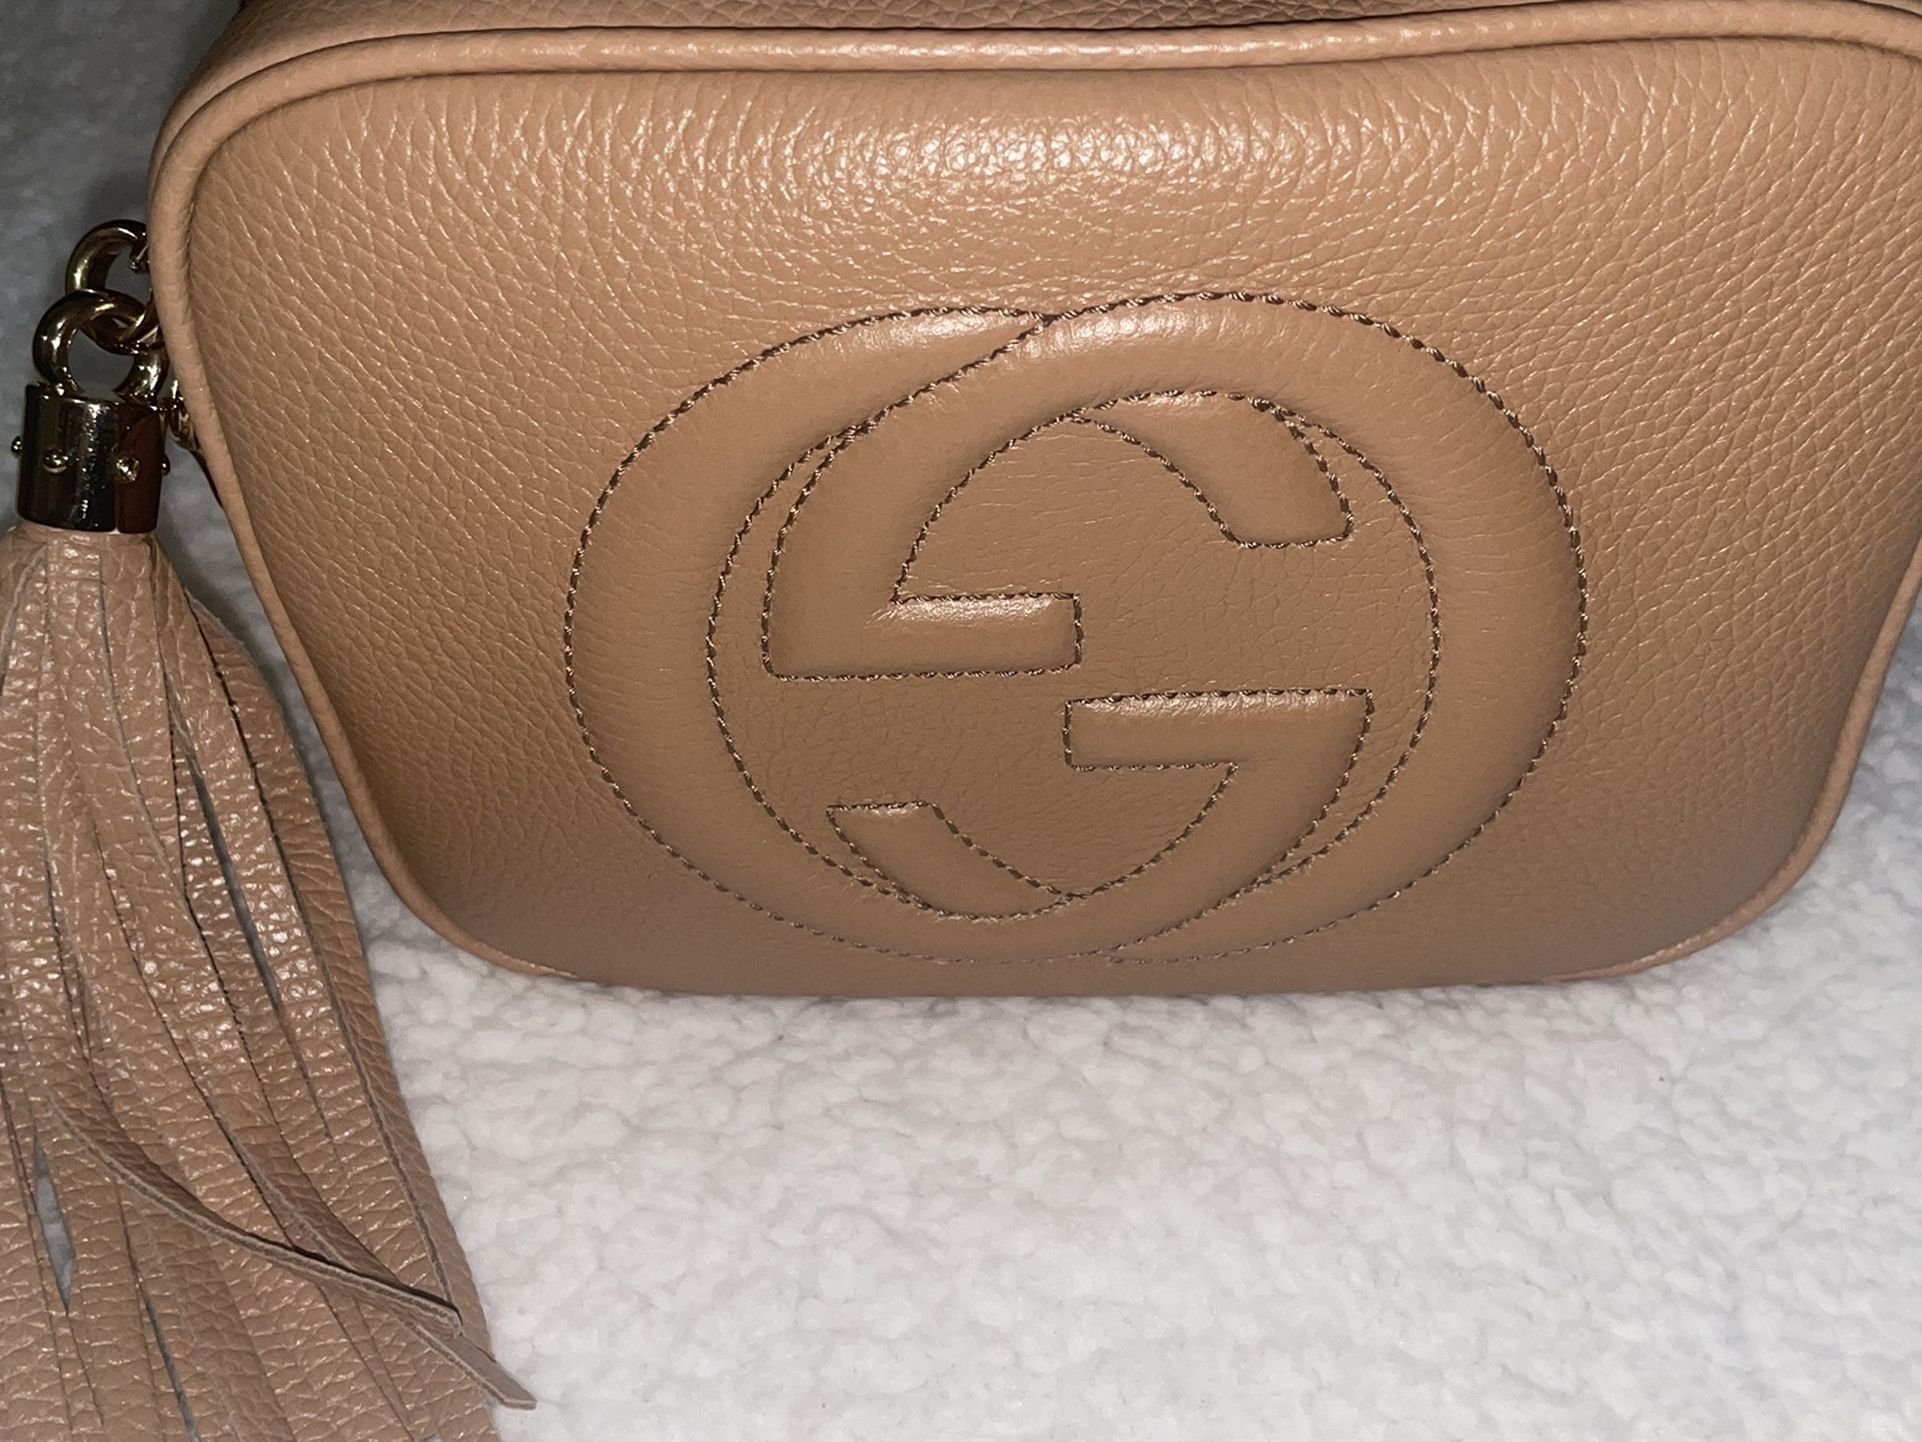 Authentic Gucci Soho Disco Crossbody Bag Pebbled Calfskin Leather Small Camelia Beige